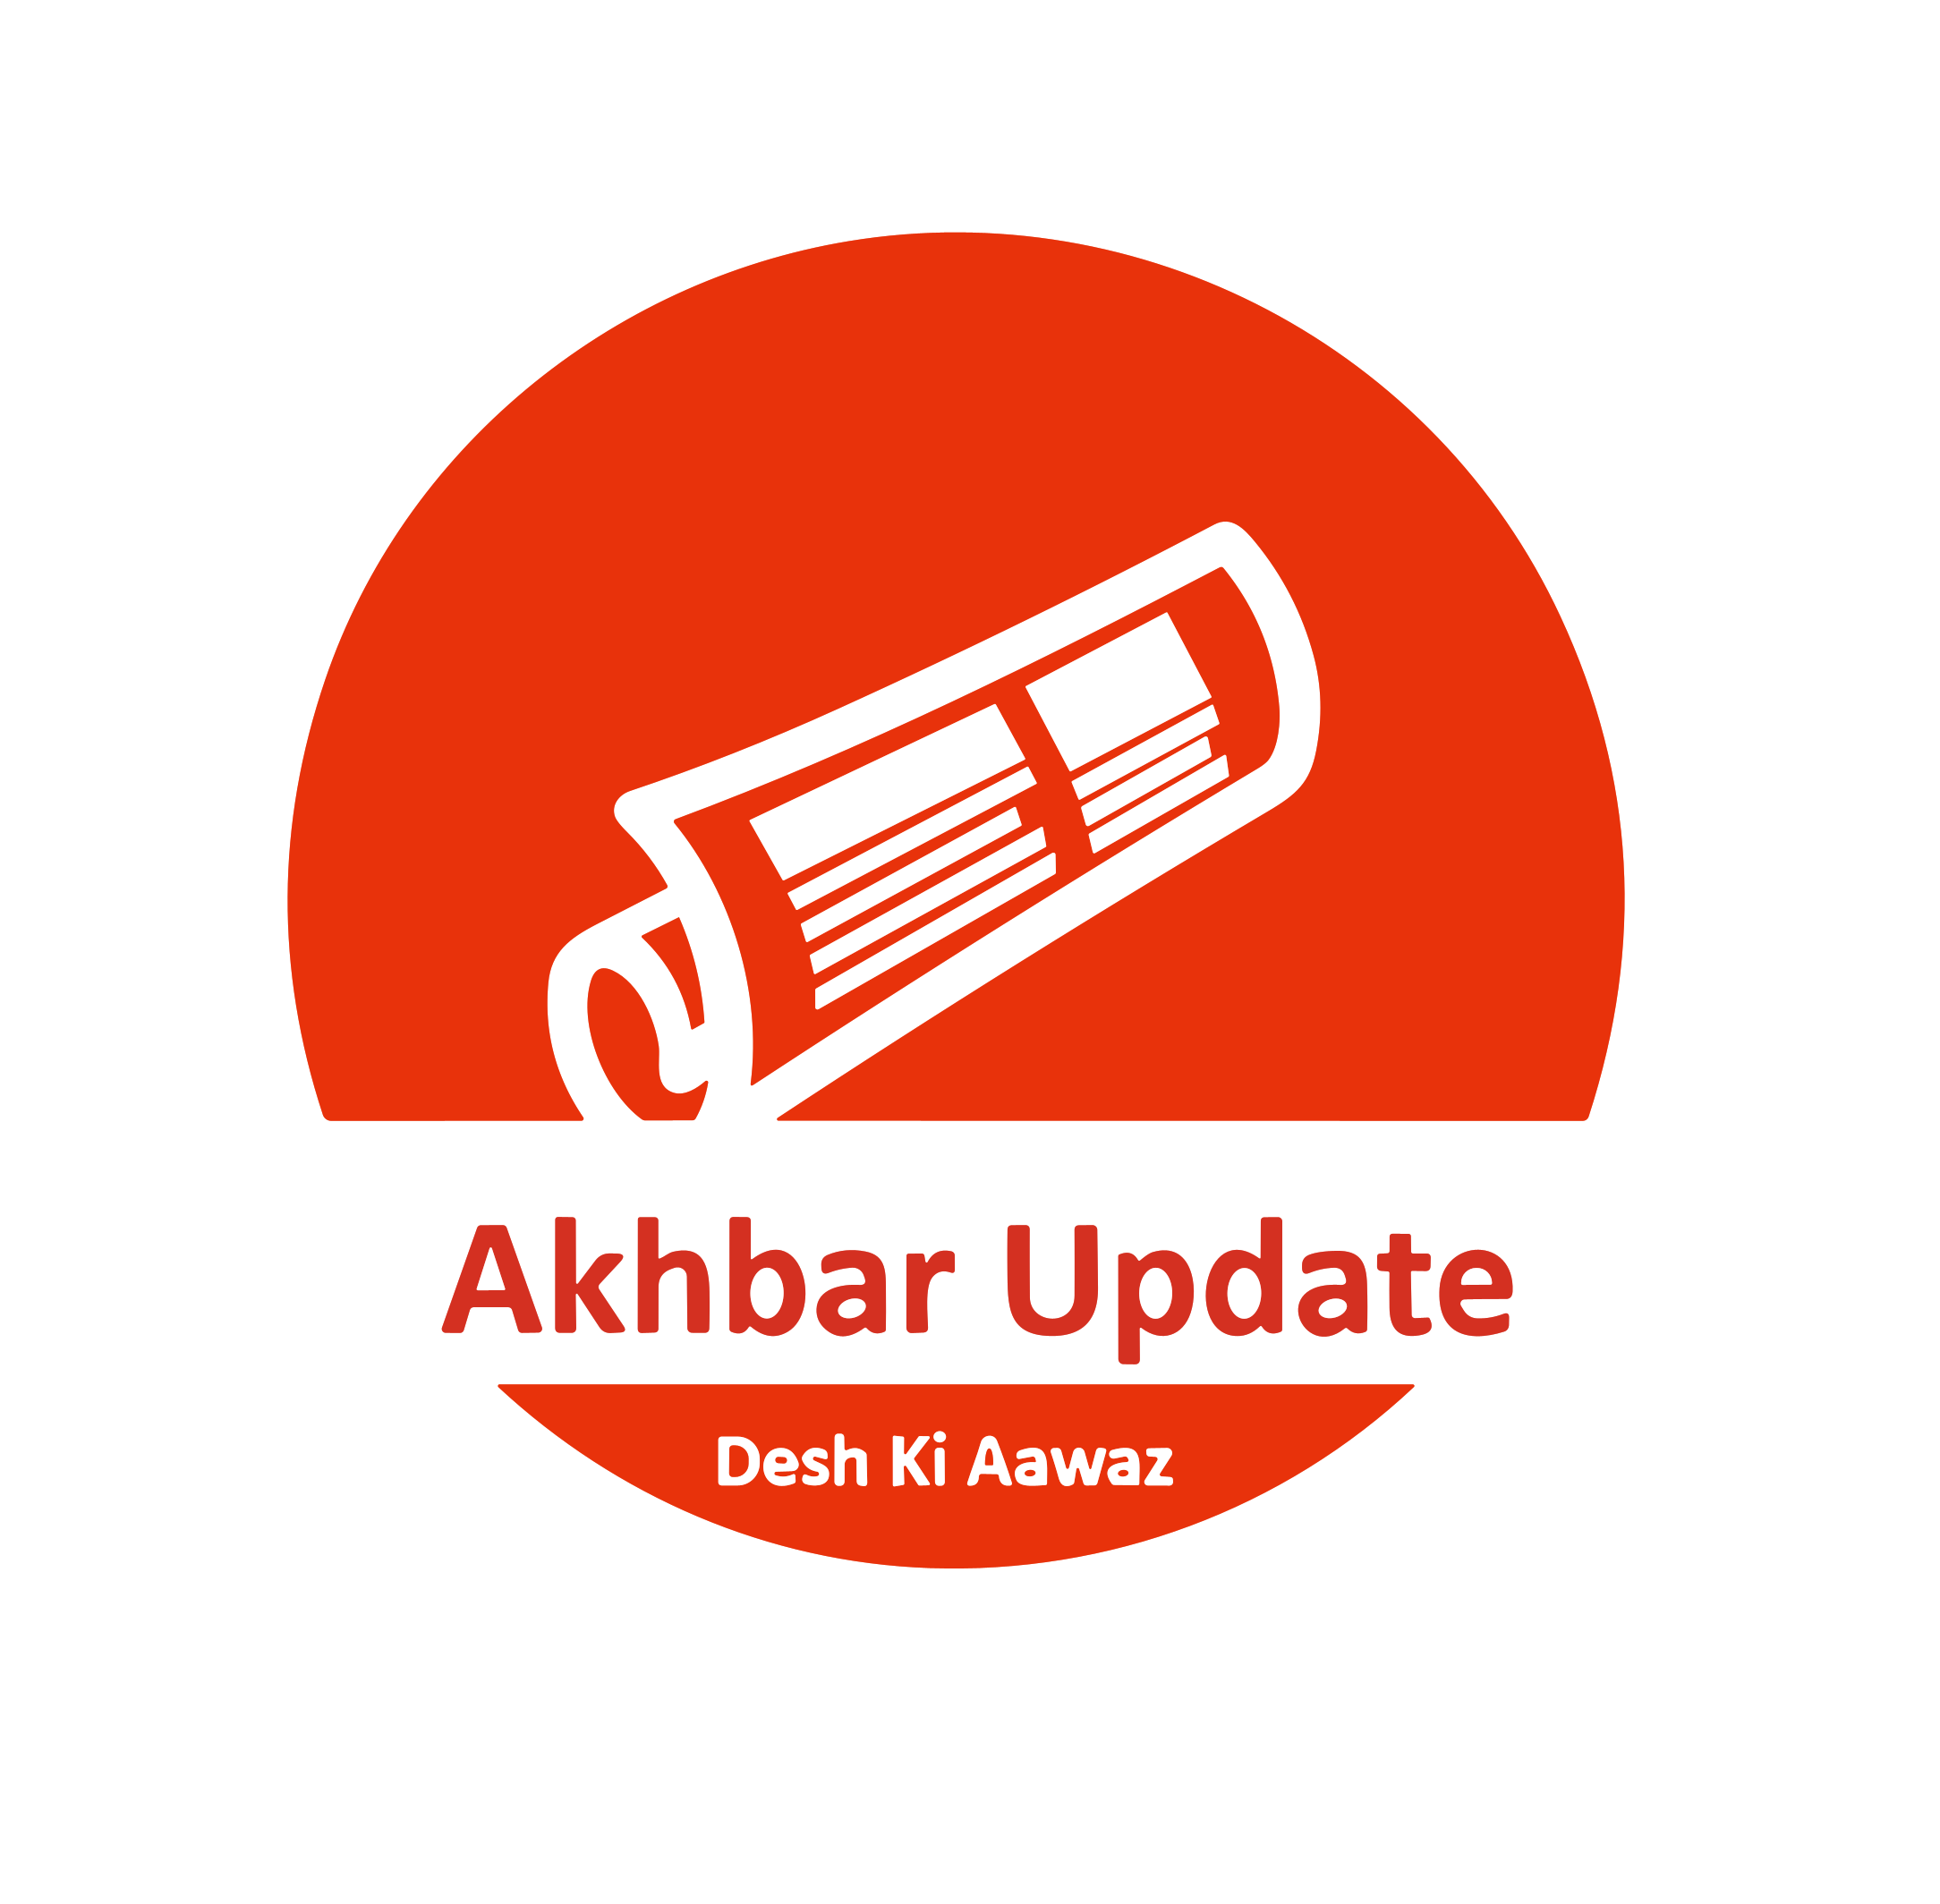 Akhbar Update